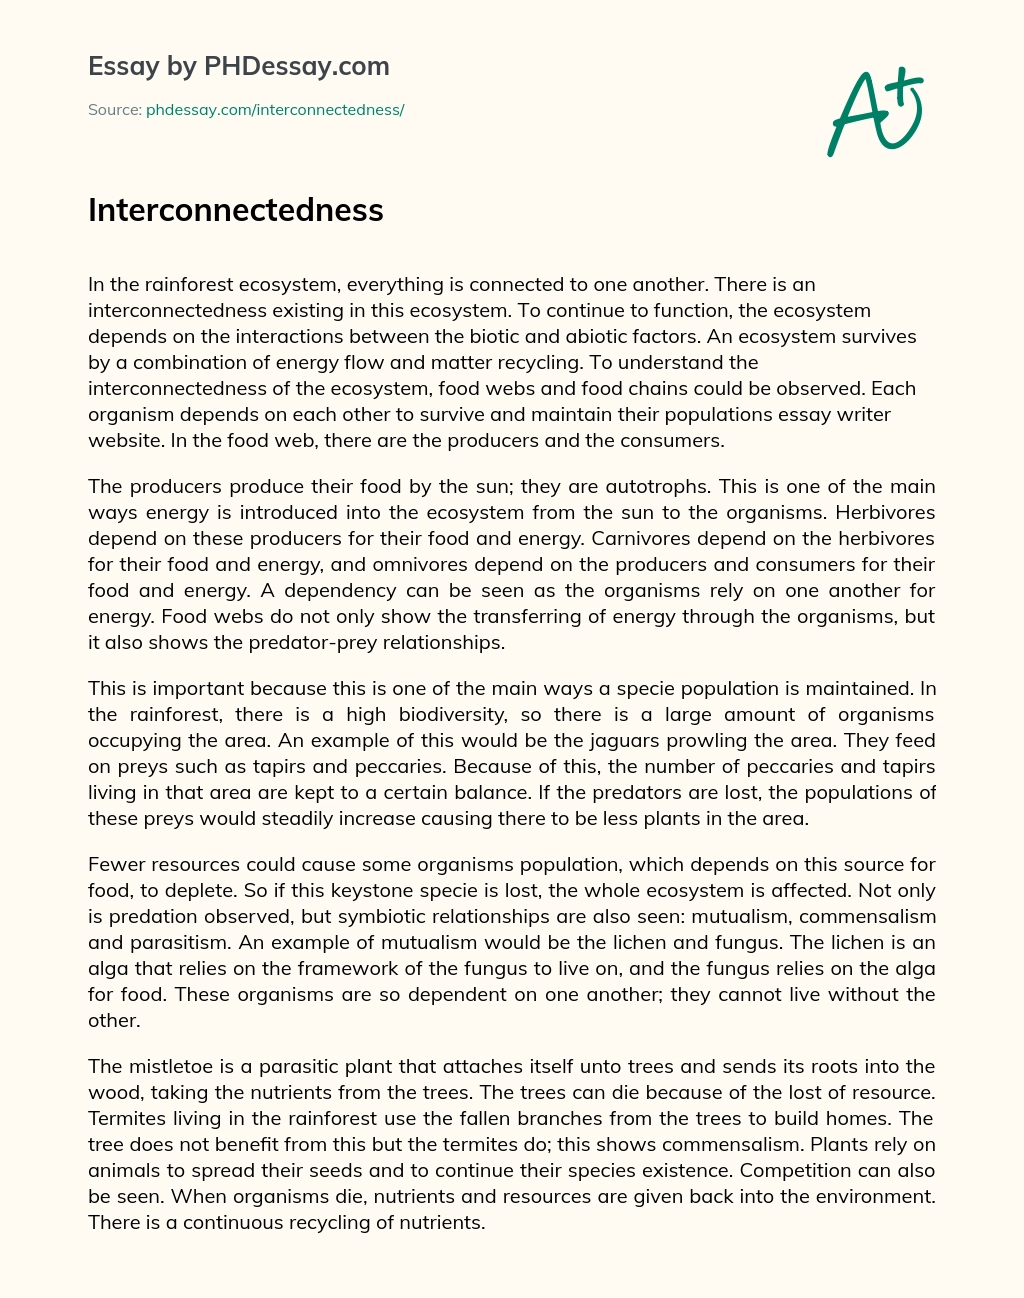 Interconnectedness essay